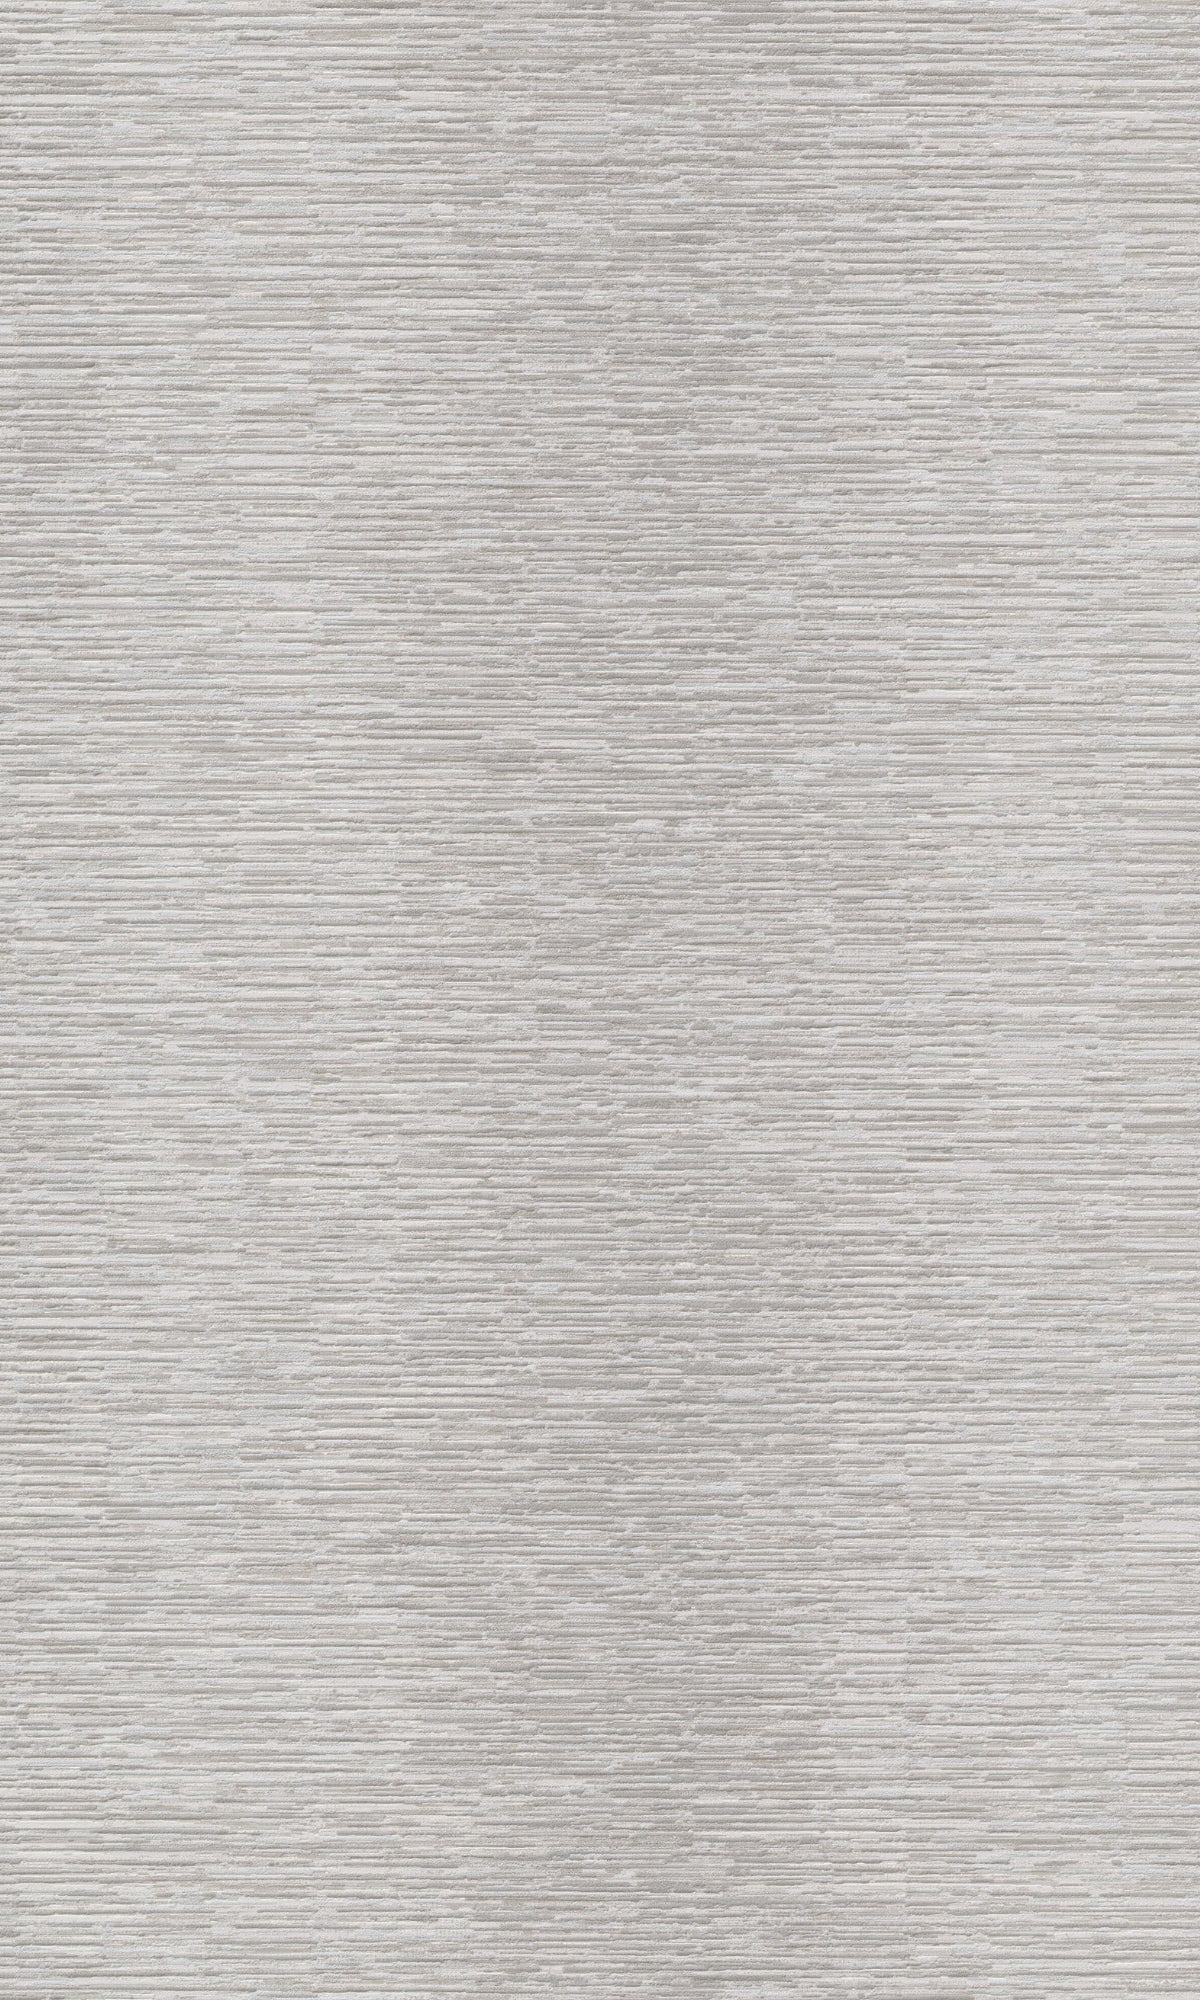 Grey Plain Textured Horizontal Line Wallpaper R8014